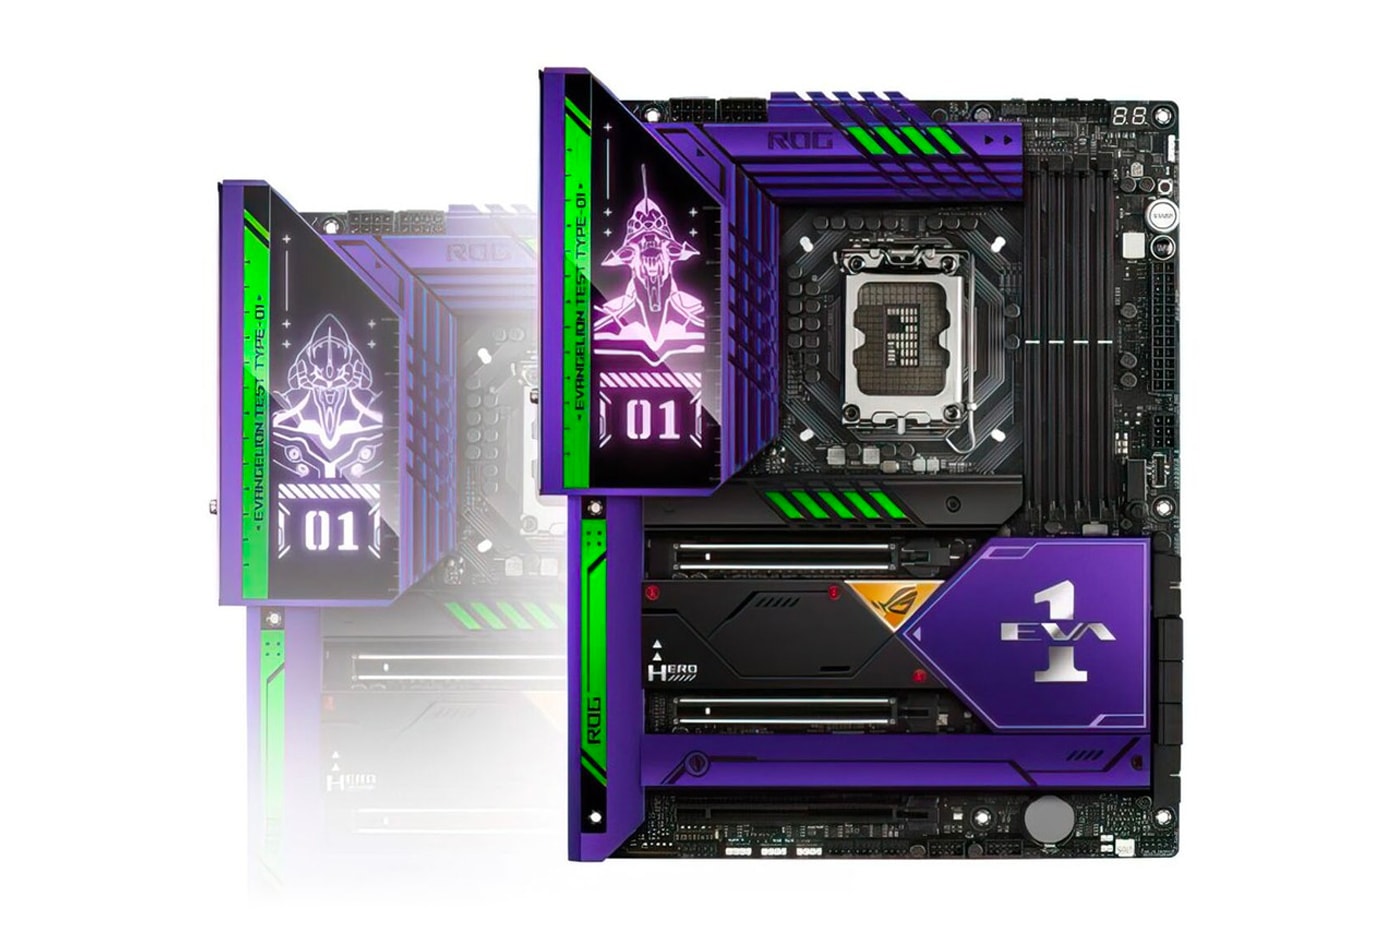 Asus republic of gamers rog evangelion unit 01 purple green ROG MAXIMUS Z690 HERO motherboard ROG STRIX RTX 3090 graphics card release info